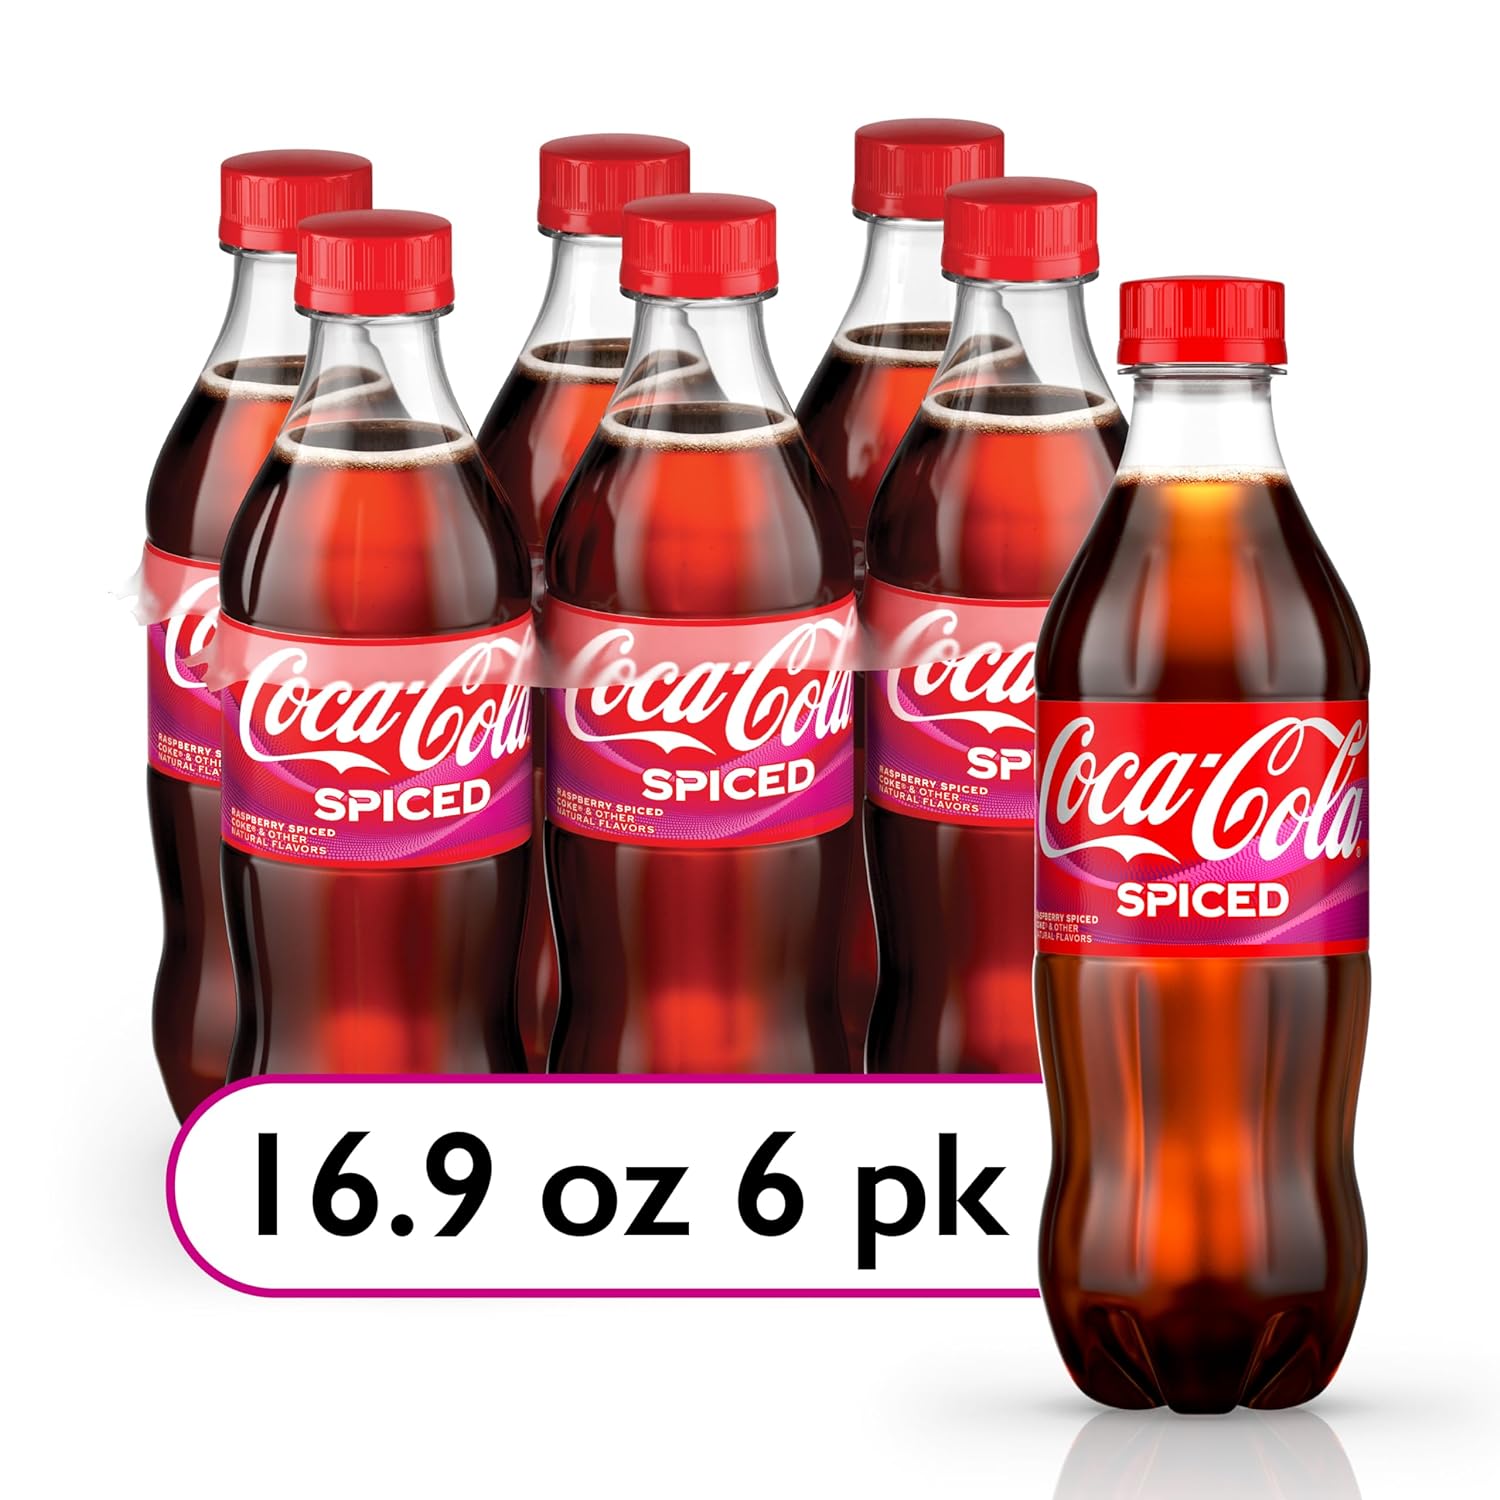 $3.78 w/ S&S: Coca-Cola Spiced 16.9oz 6pk Amazon